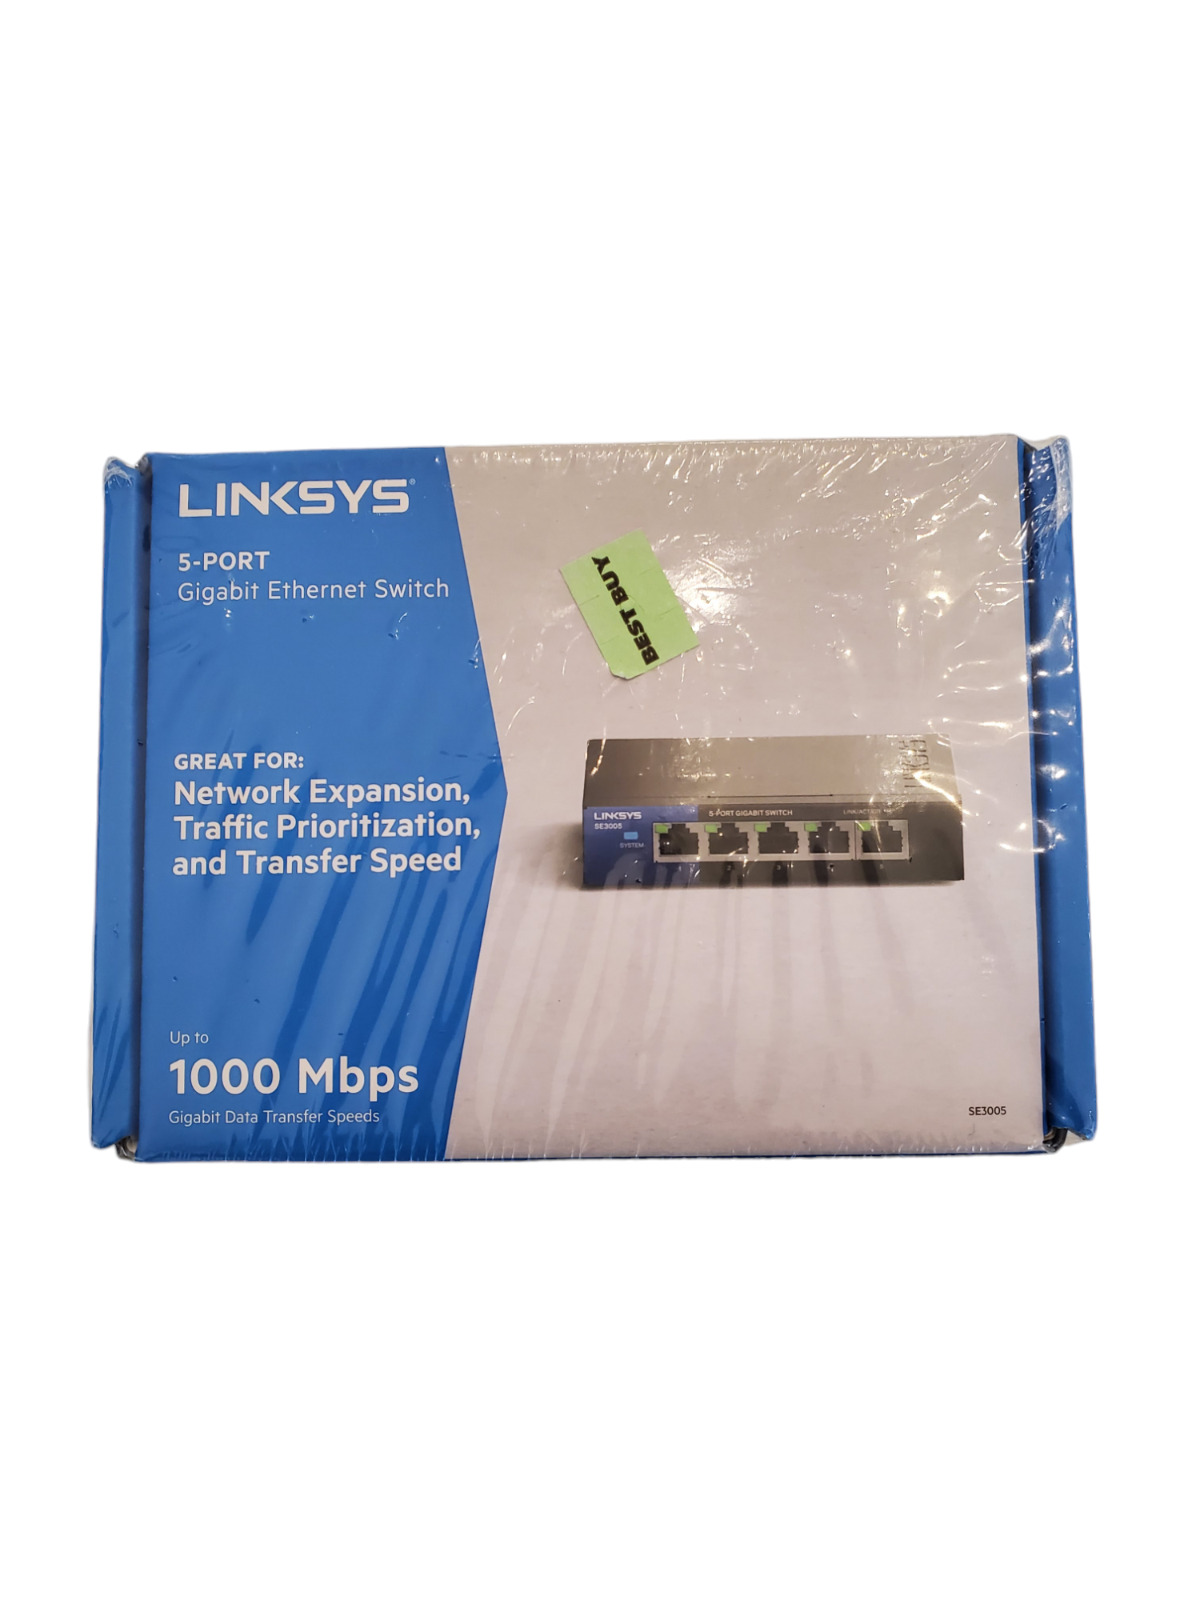 Linksys SE3005 V2 5-port Gigabit Ethernet Switch Brand New Sealed